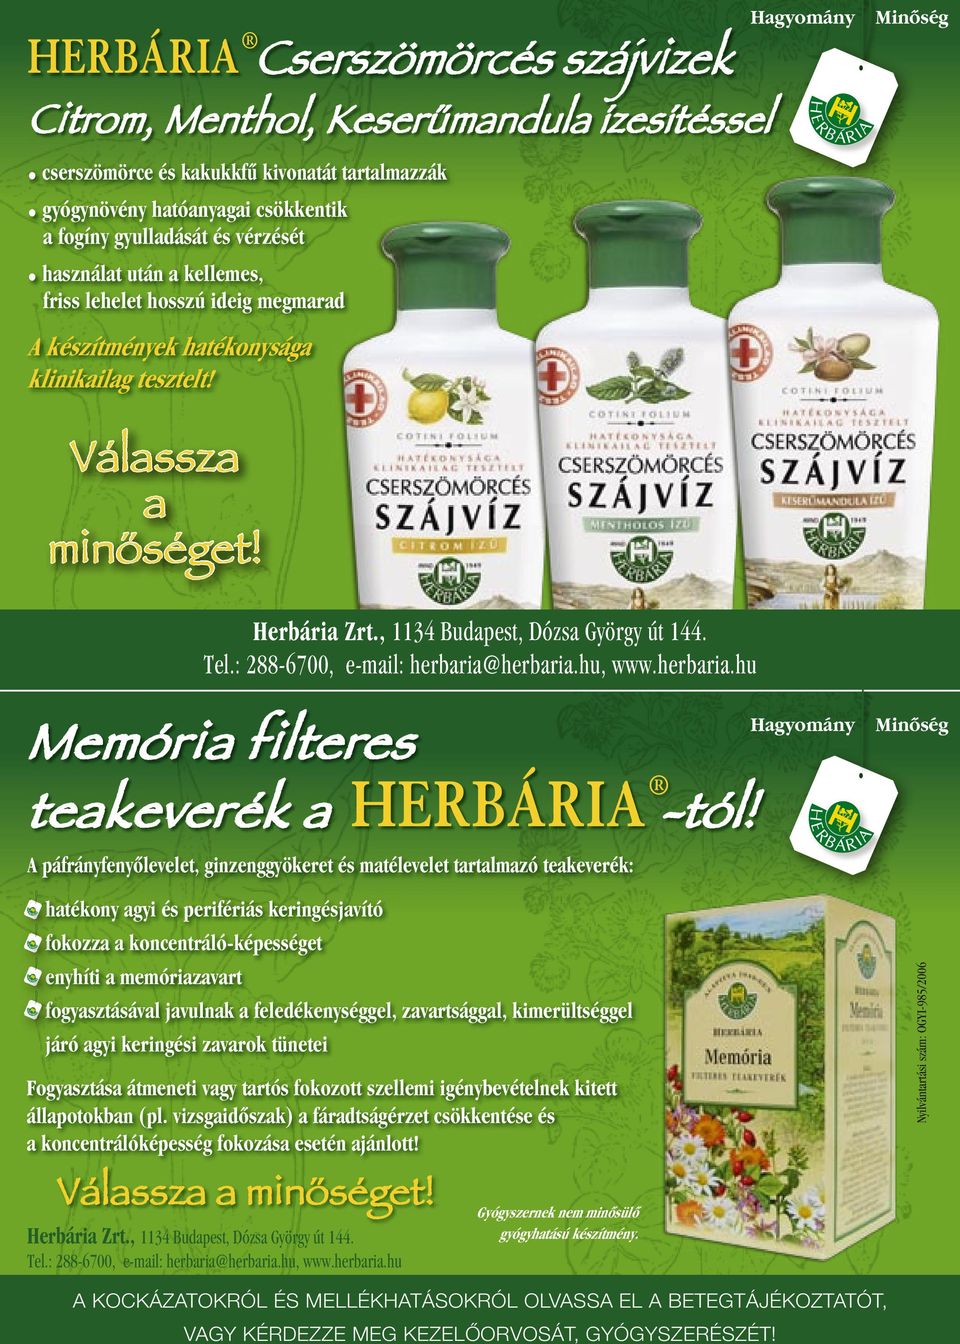 : 288-6700, e-mail: herbaria@herbaria.hu, www.herbaria.hu Memór a f lteres teakeverék a -tól!